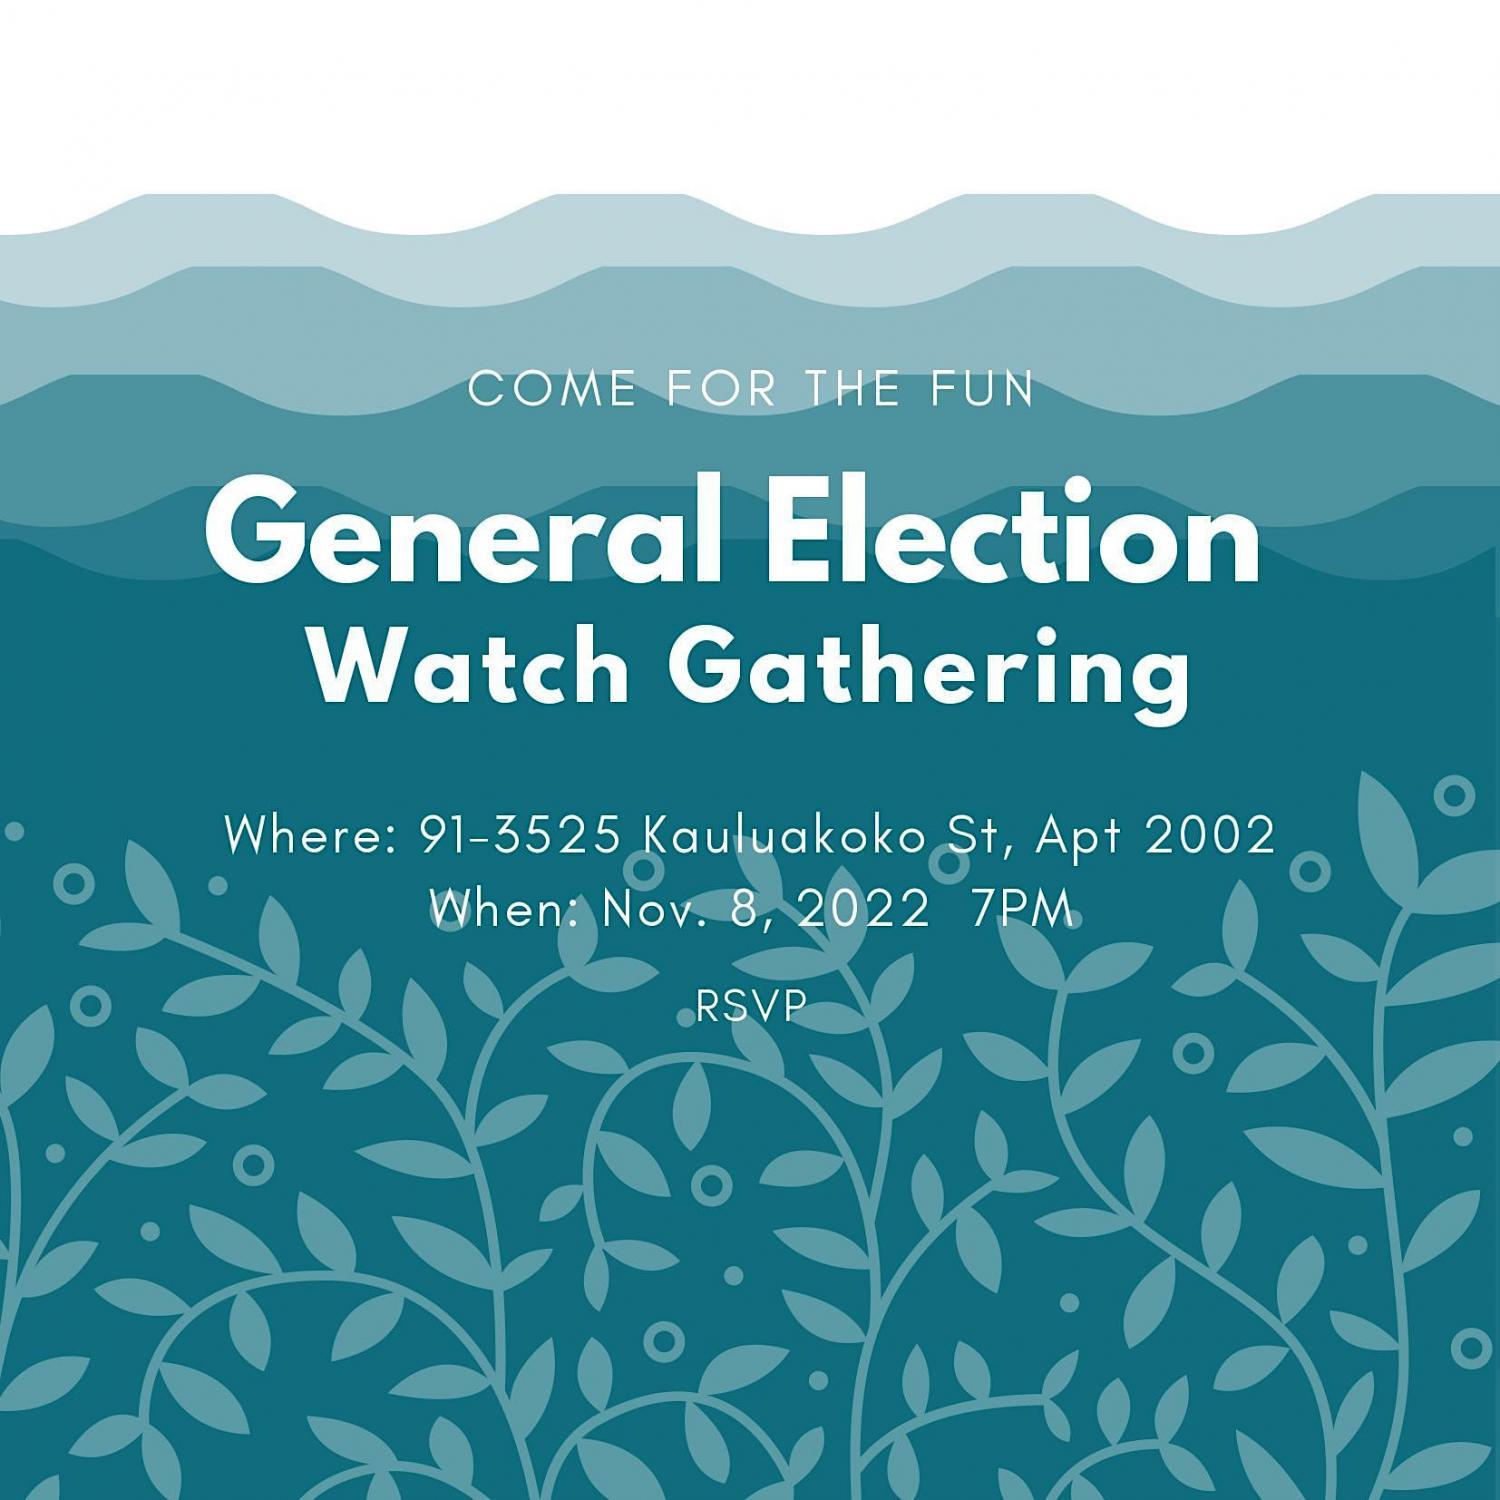 General Election Watch Gathering: Elijah PIERICK (Hawaii House District 39)
Tue Nov 8, 7:00 PM - Tue Nov 8, 7:00 PM
in 19 days